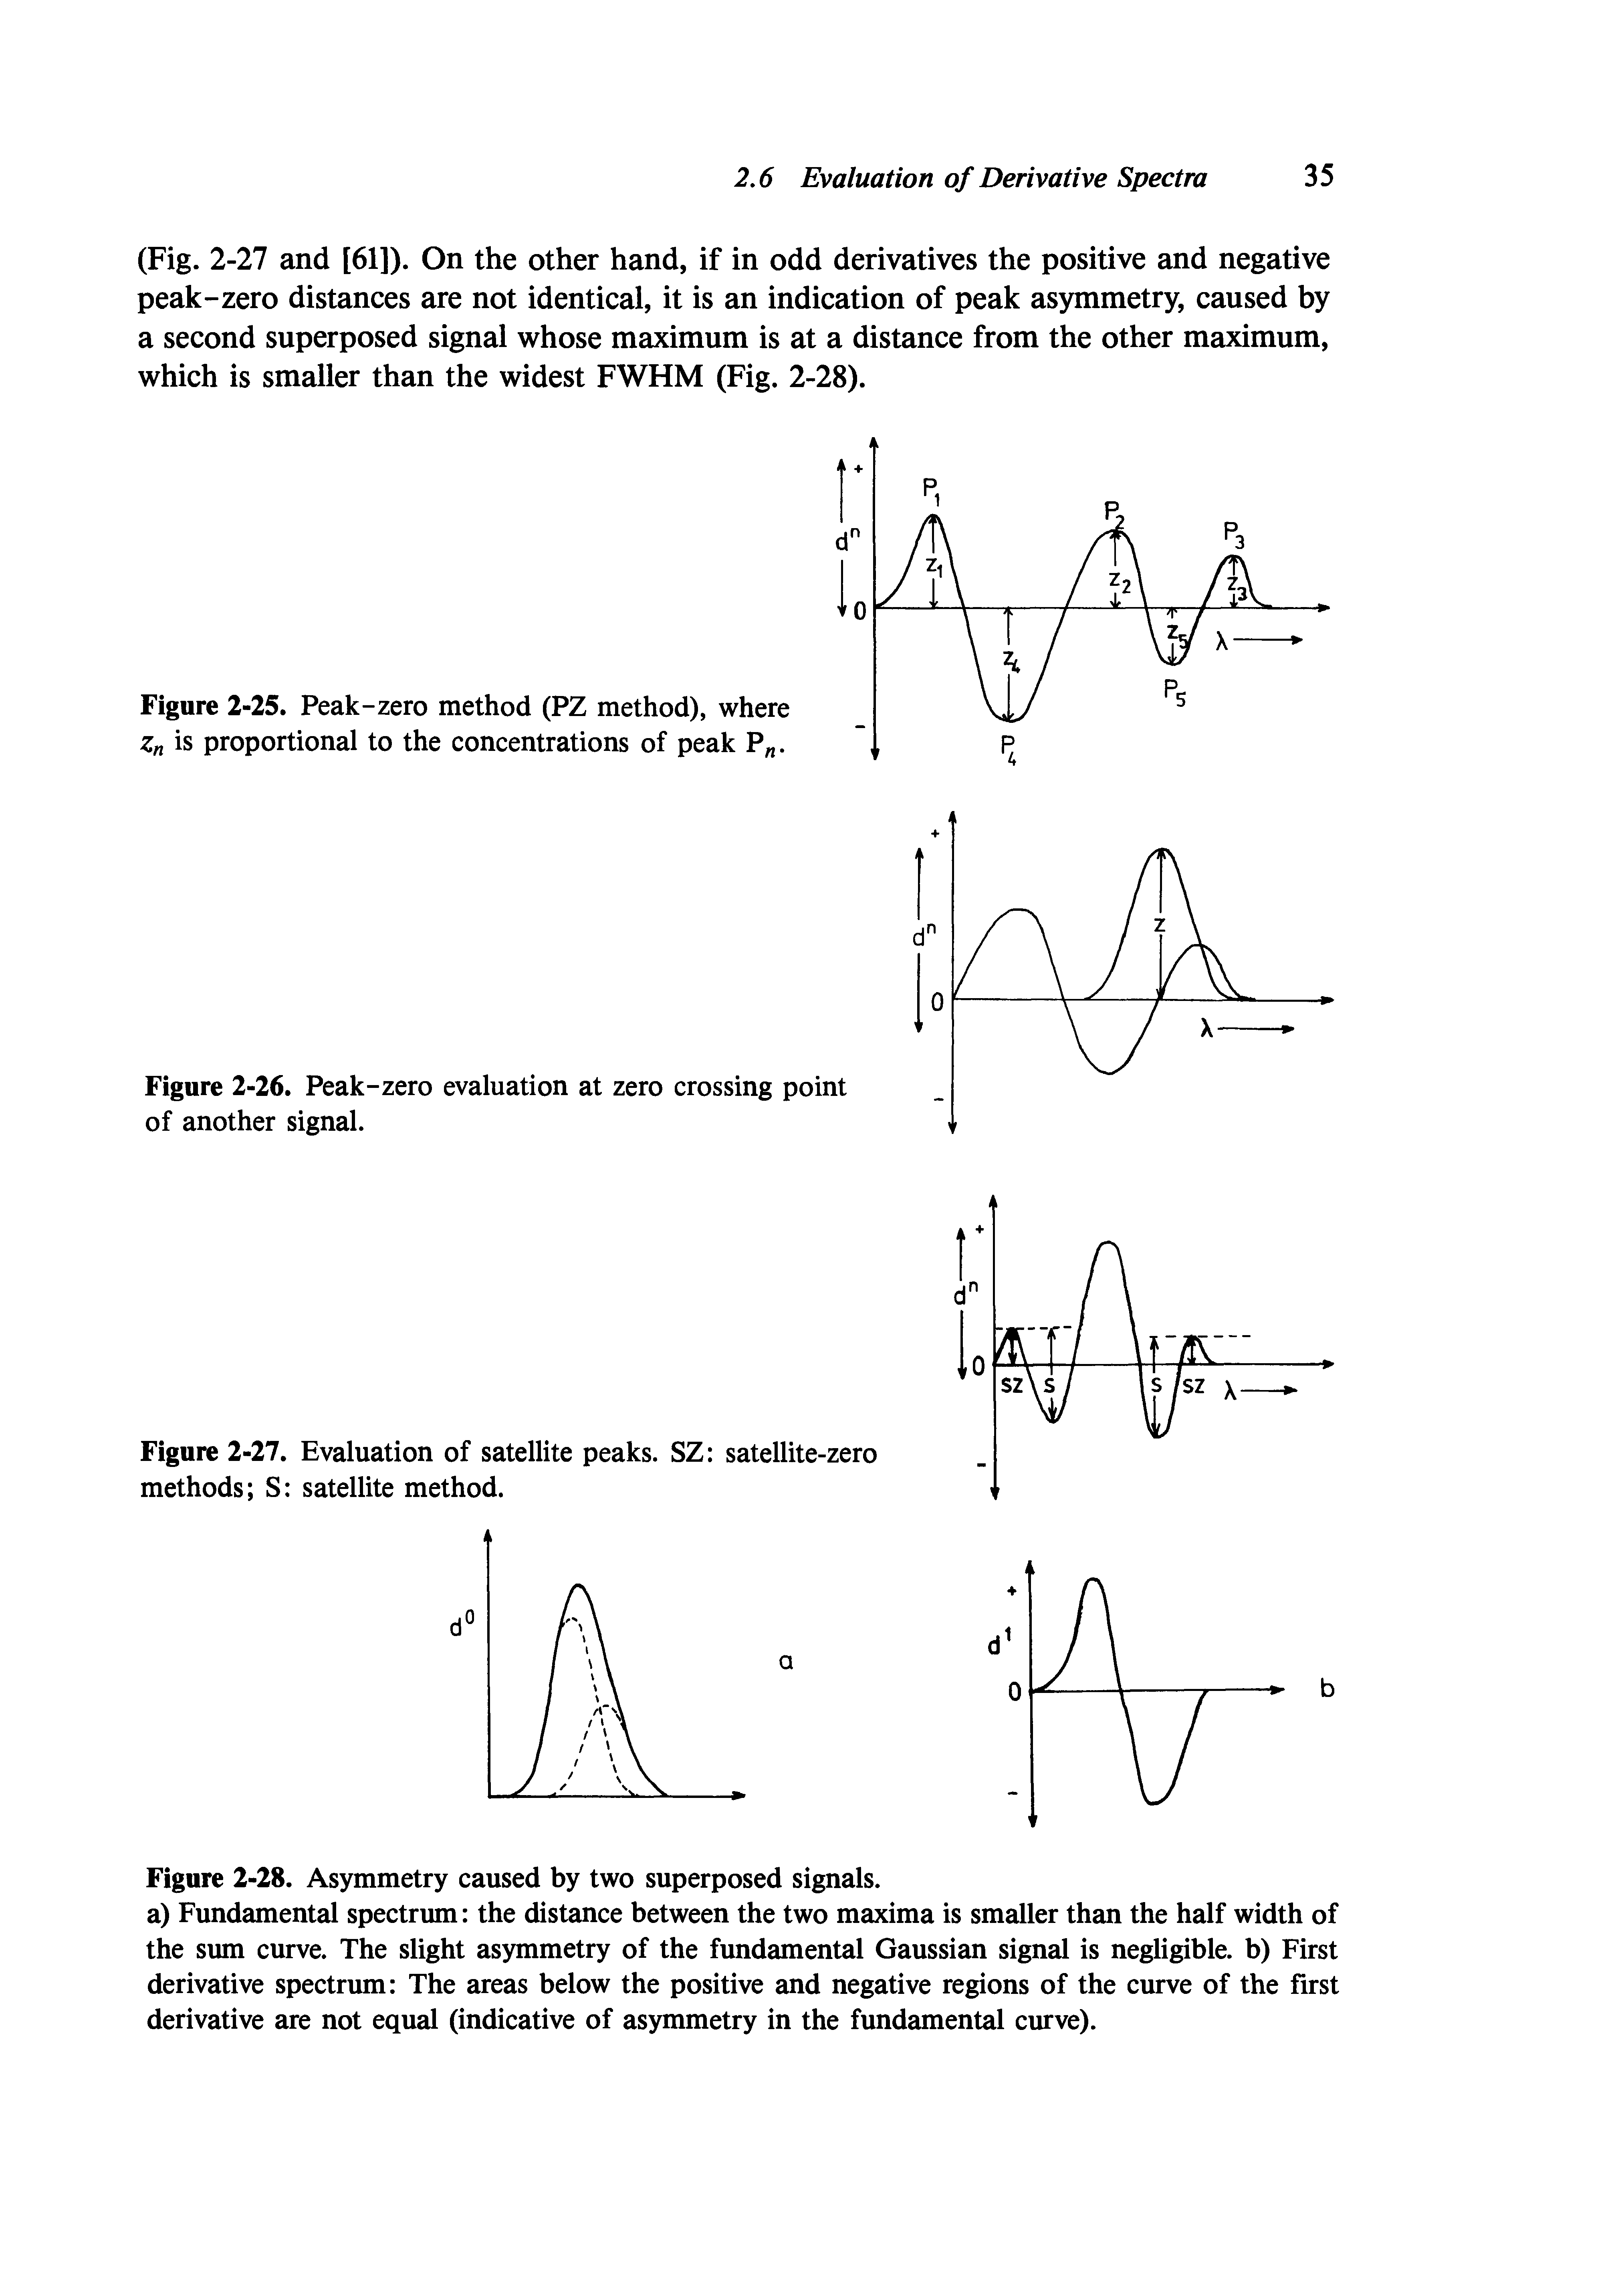 Figure 2-26. Peak-zero evaluation at zero crossing point of another signal.